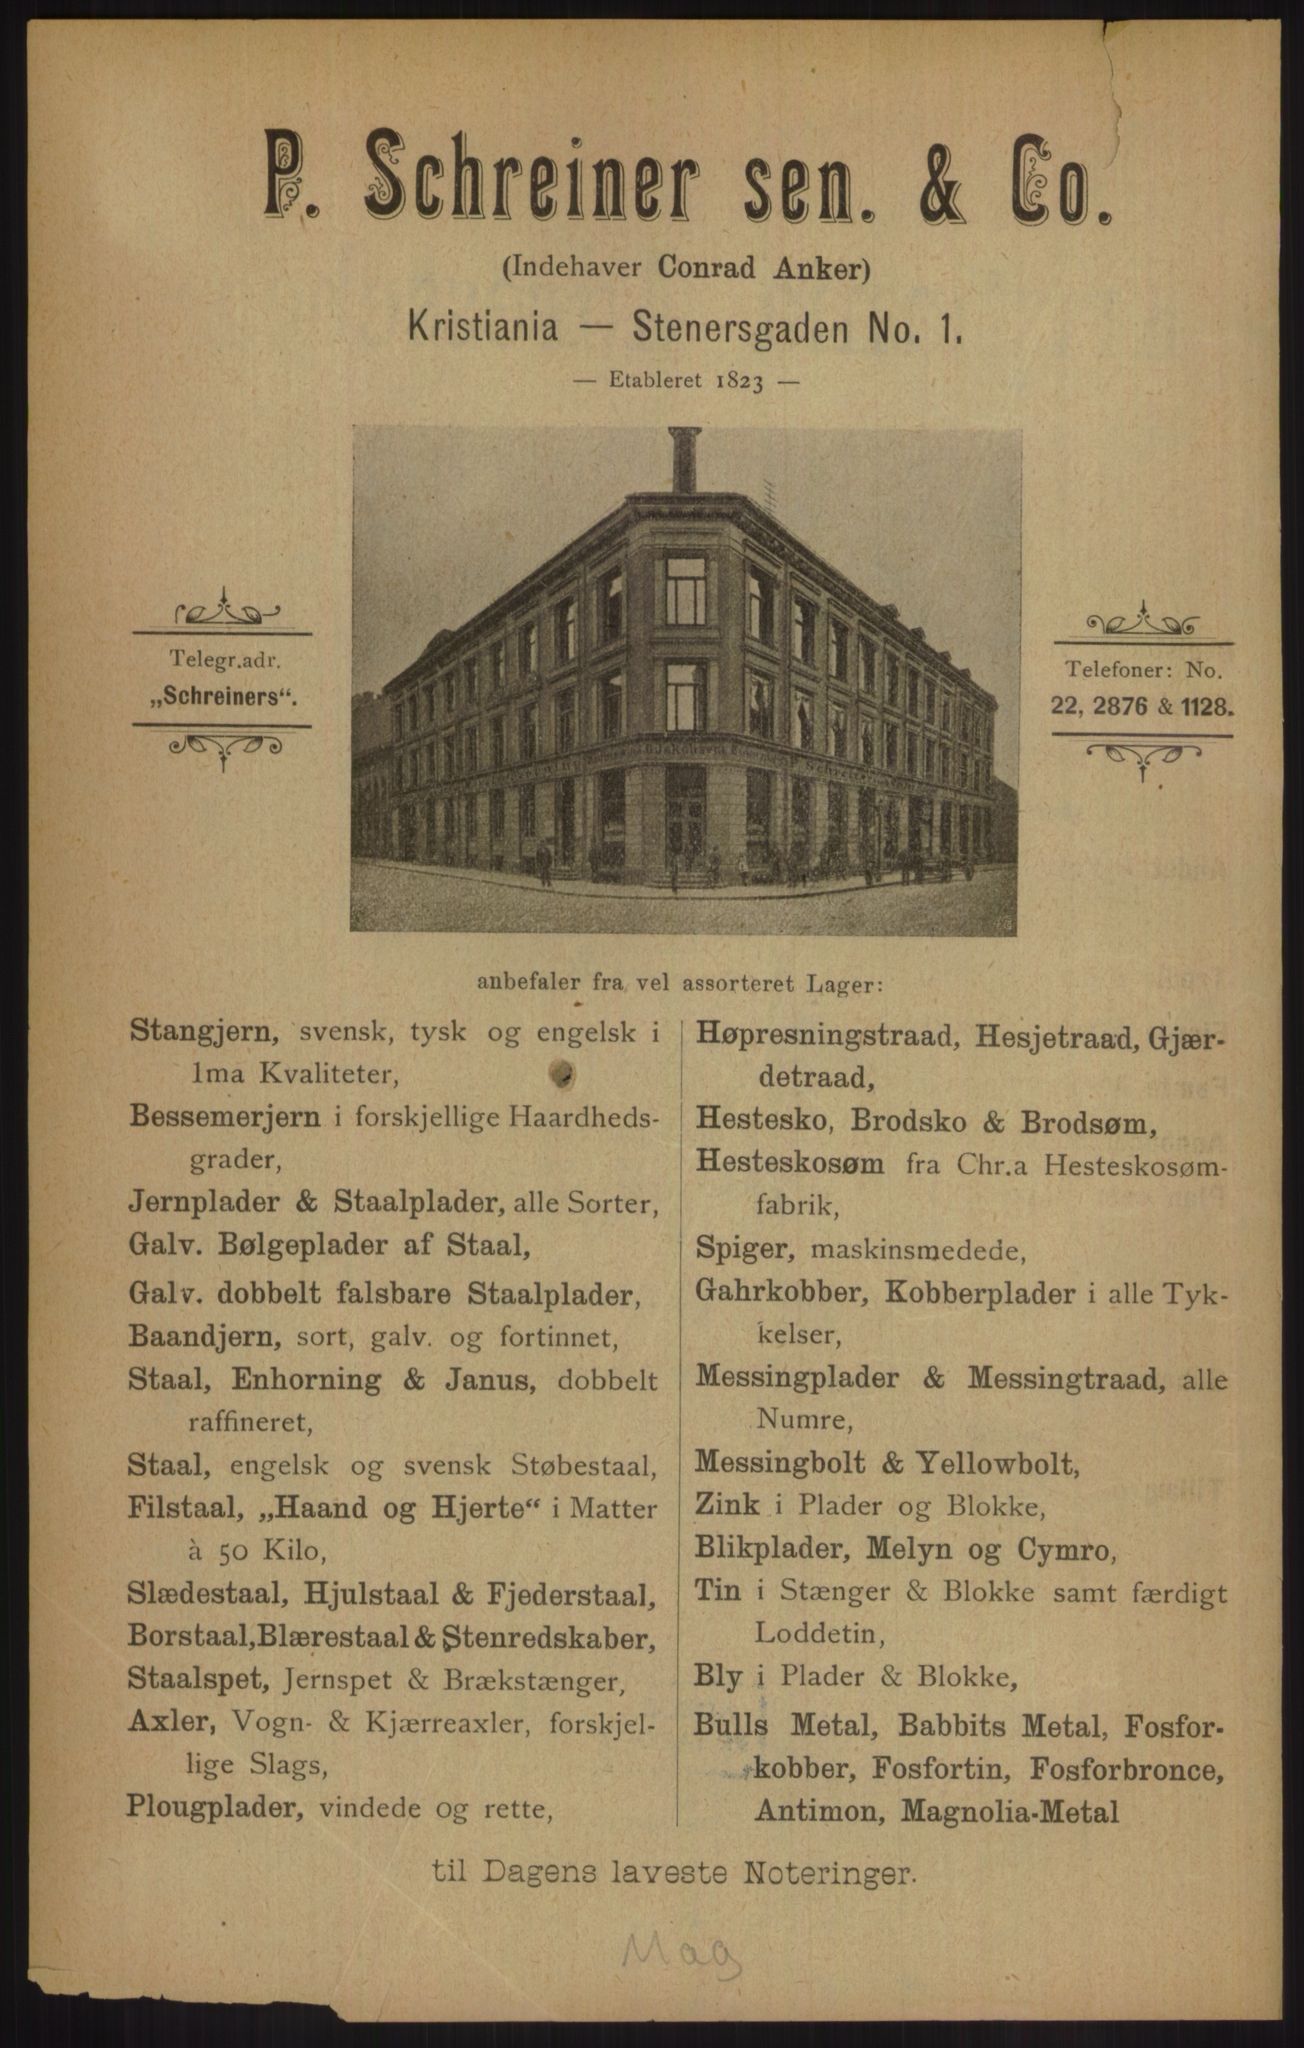 Kristiania/Oslo adressebok, PUBL/-, 1905